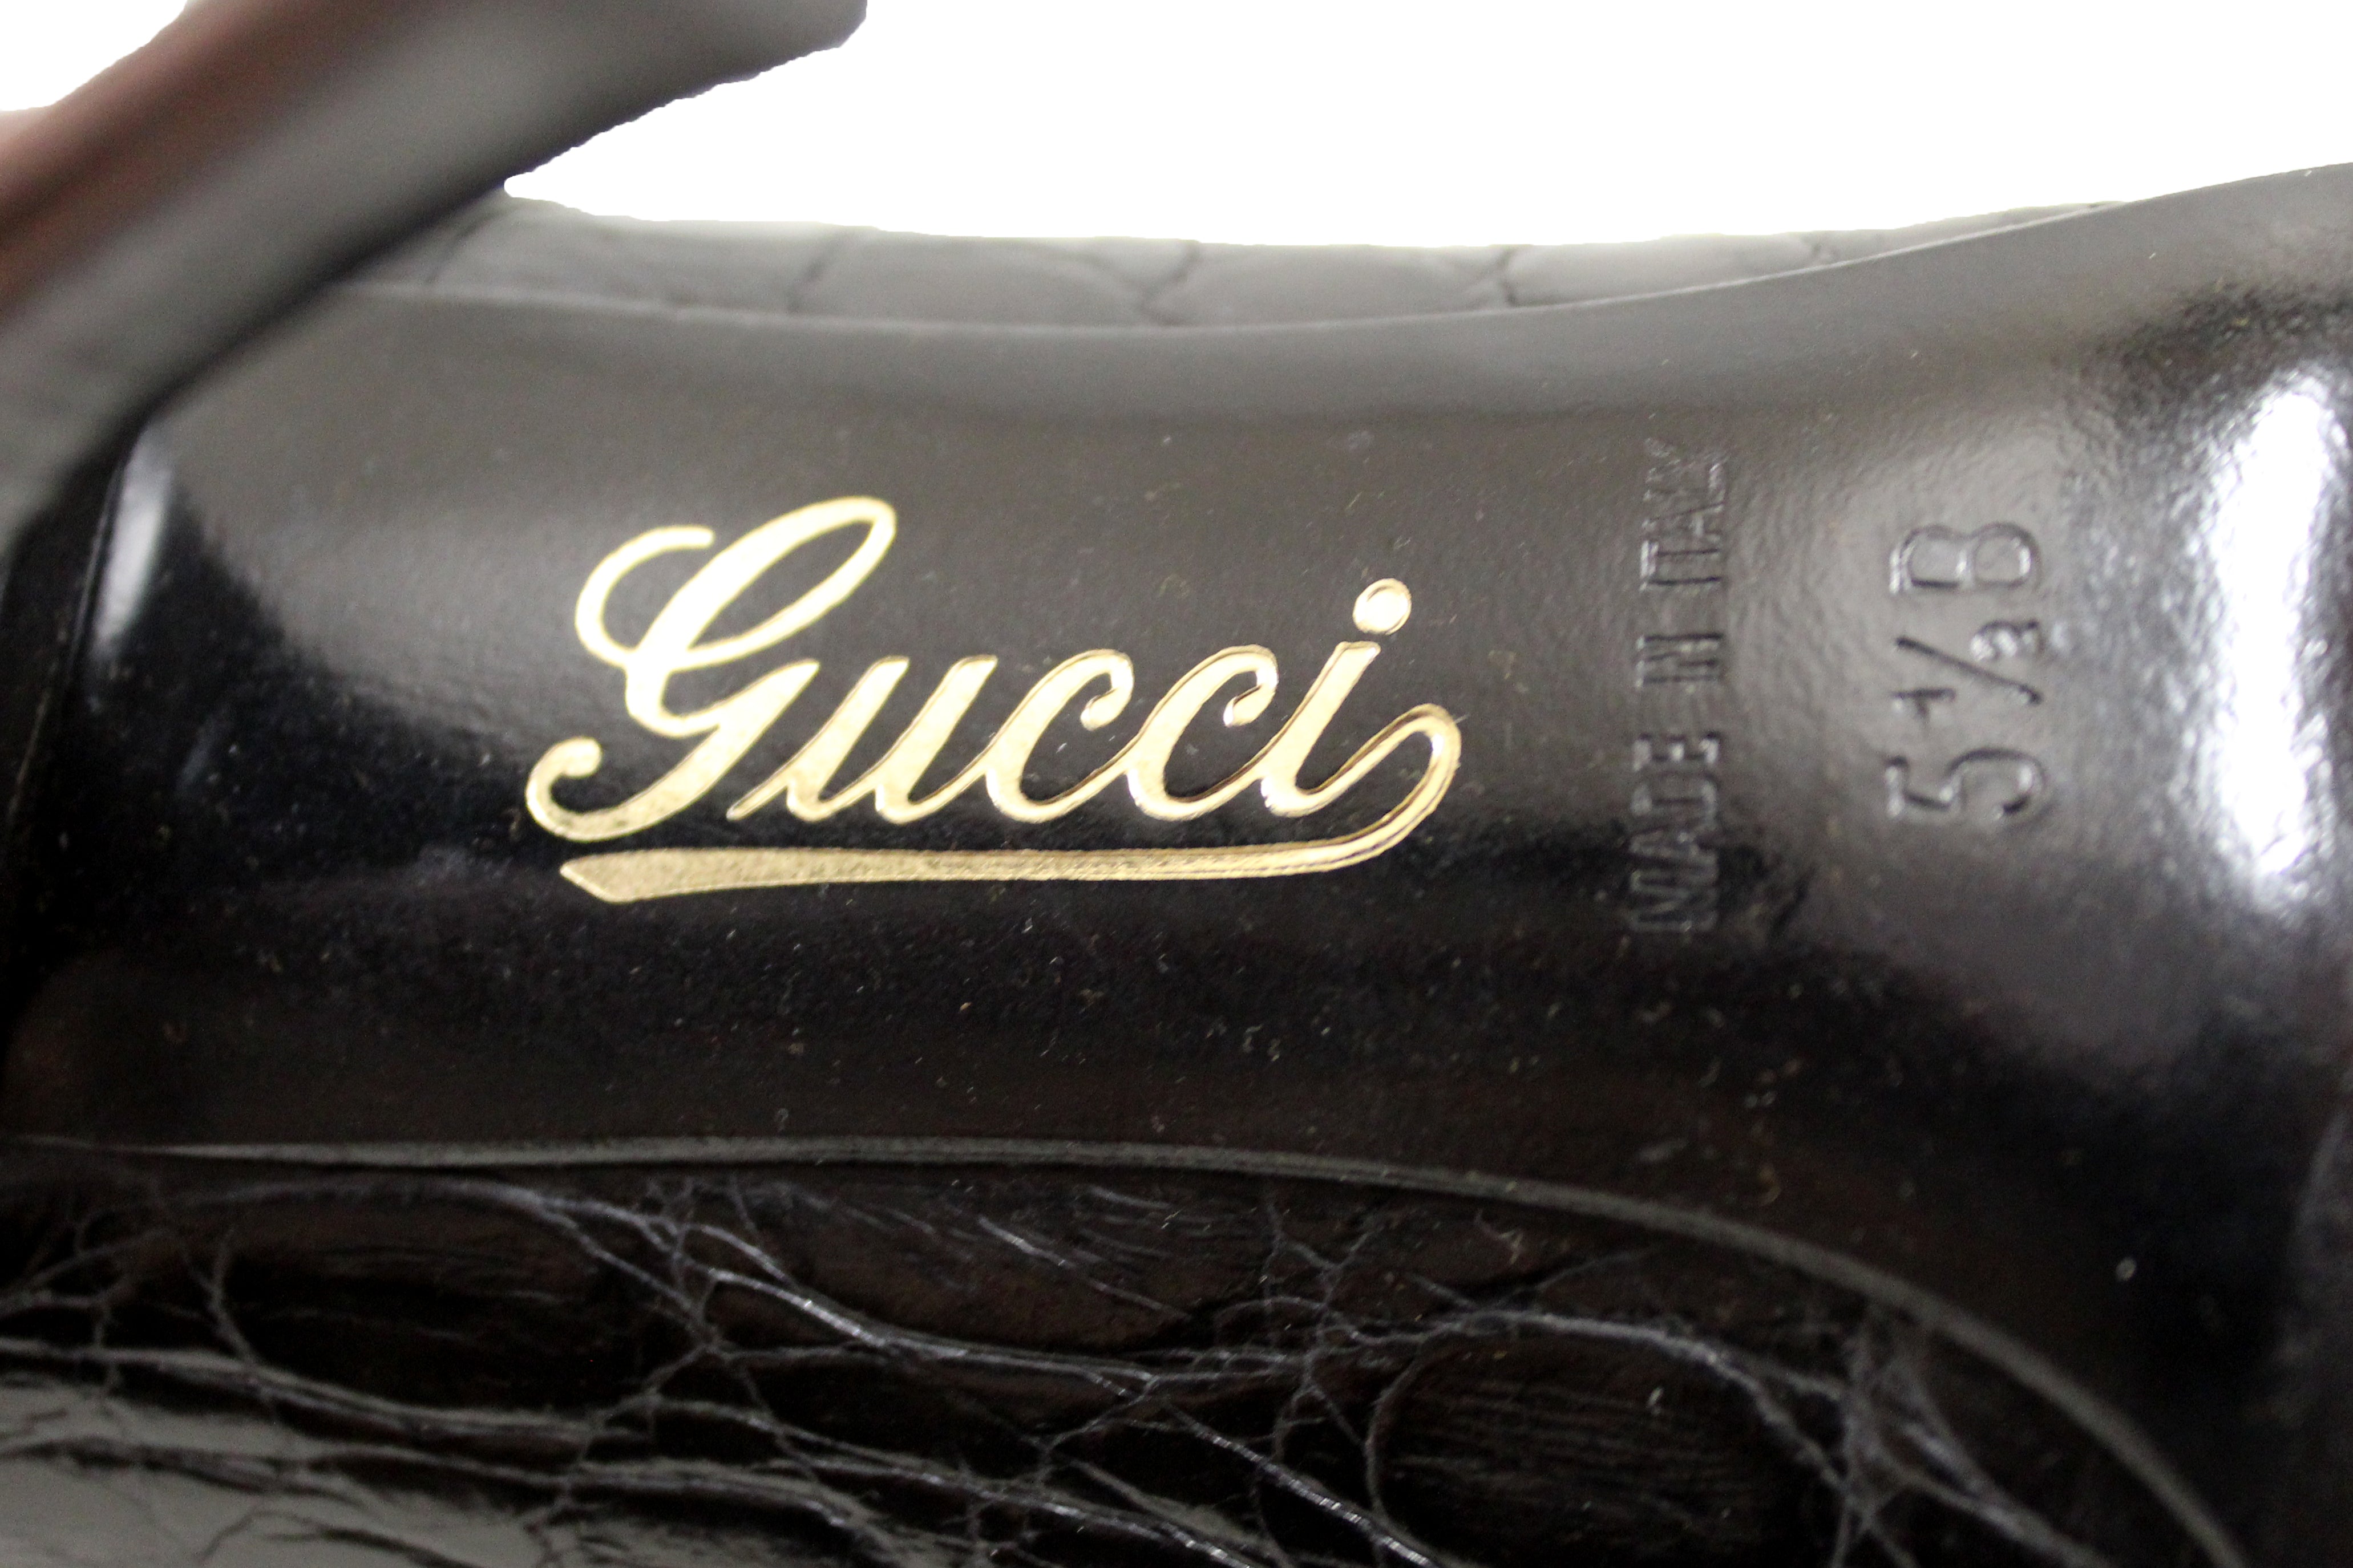 Authentic Gucci Black Crocodile Closed Toe Pumps Shoes Size 5.5B